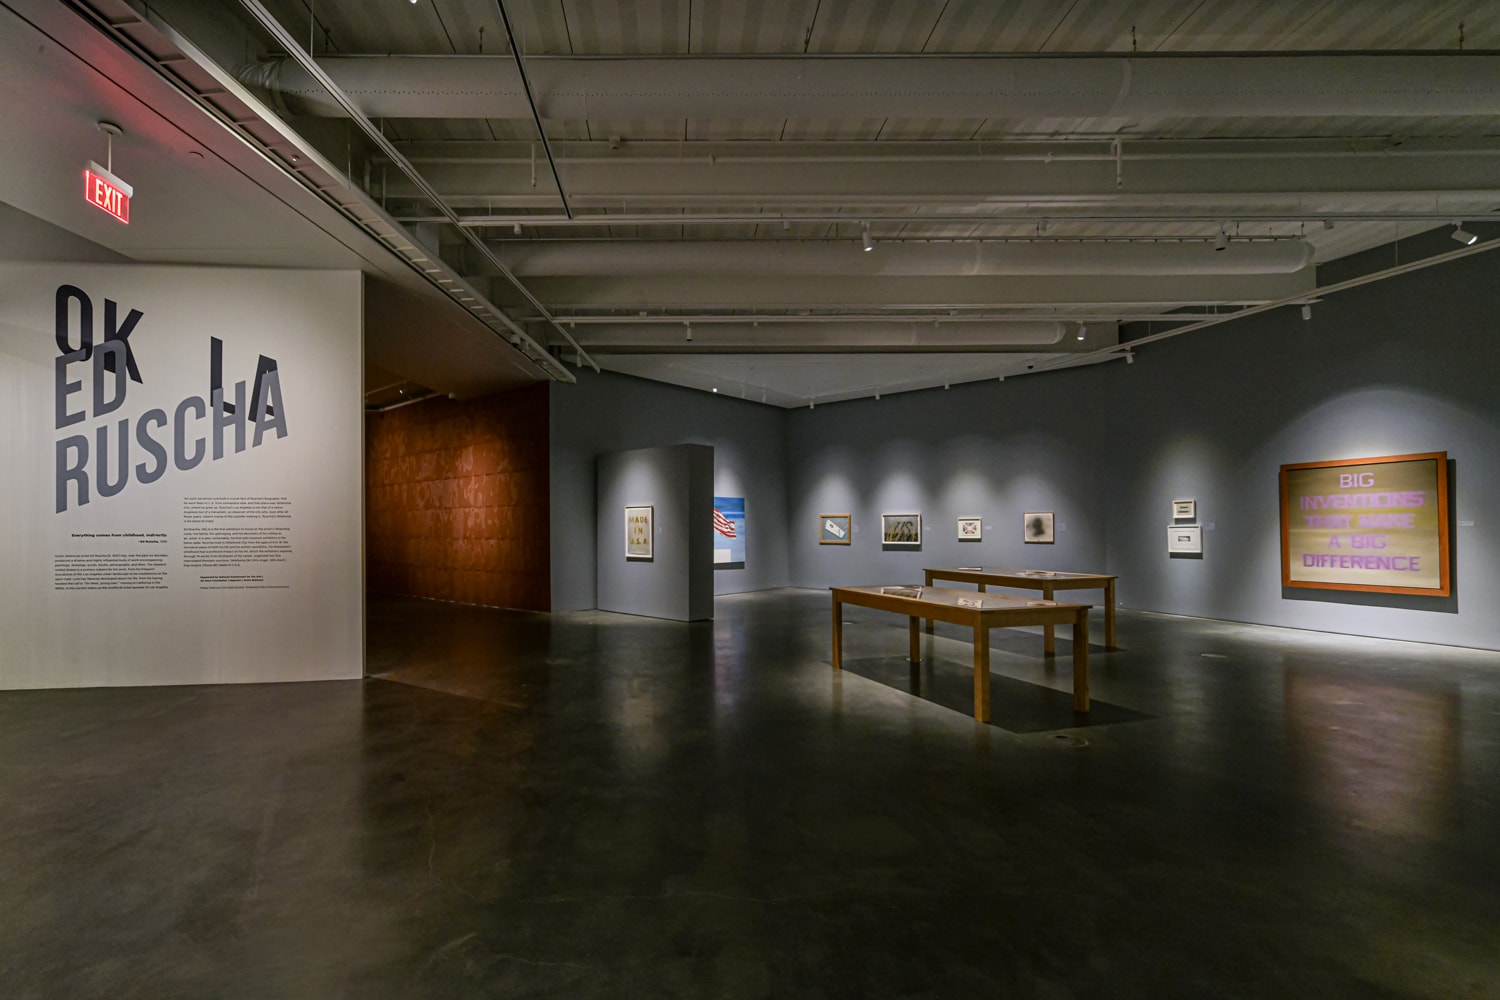 ed ruscha okla oklahoma contemporary gallery